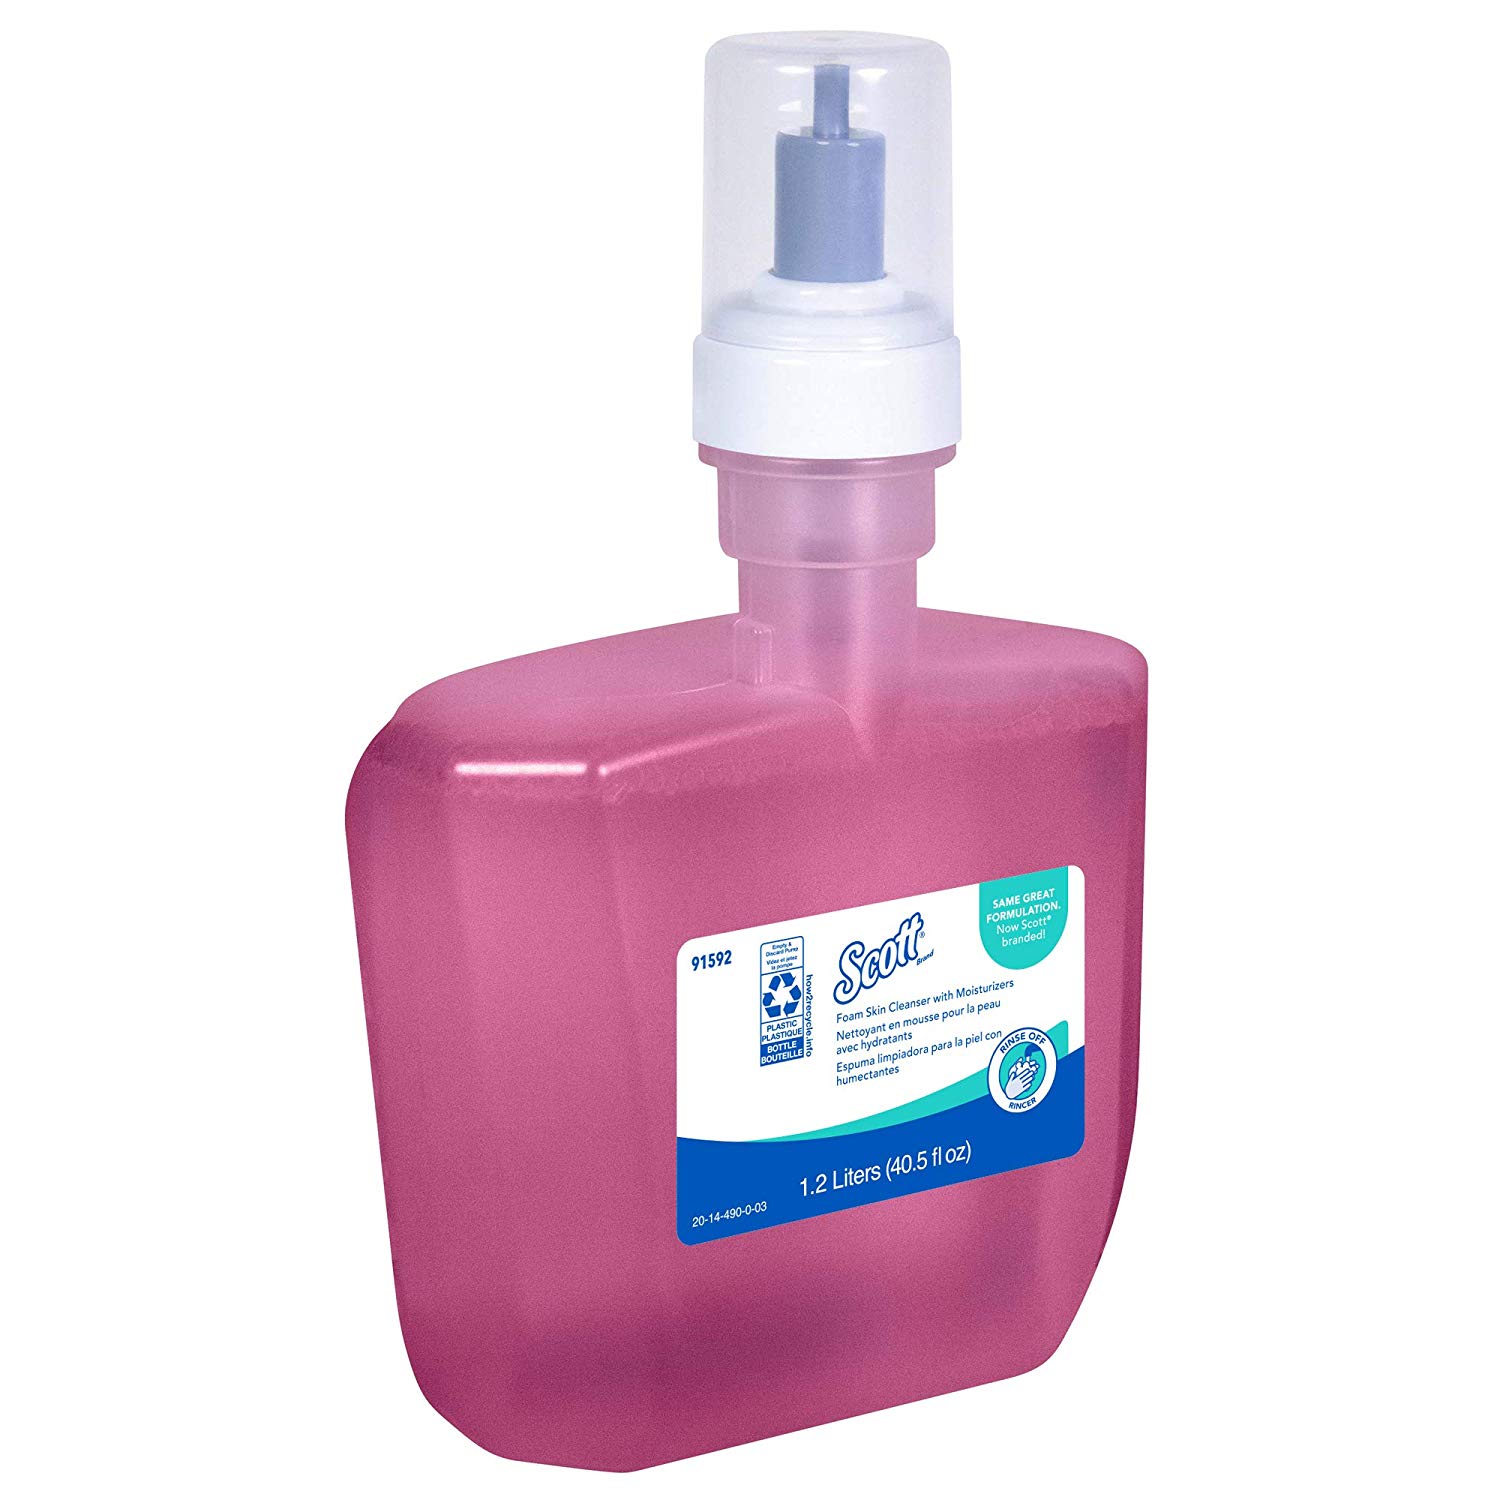 Scott® Pro Foam Skin Cleanser with Moisturizers - 1.2 L, 2/Case